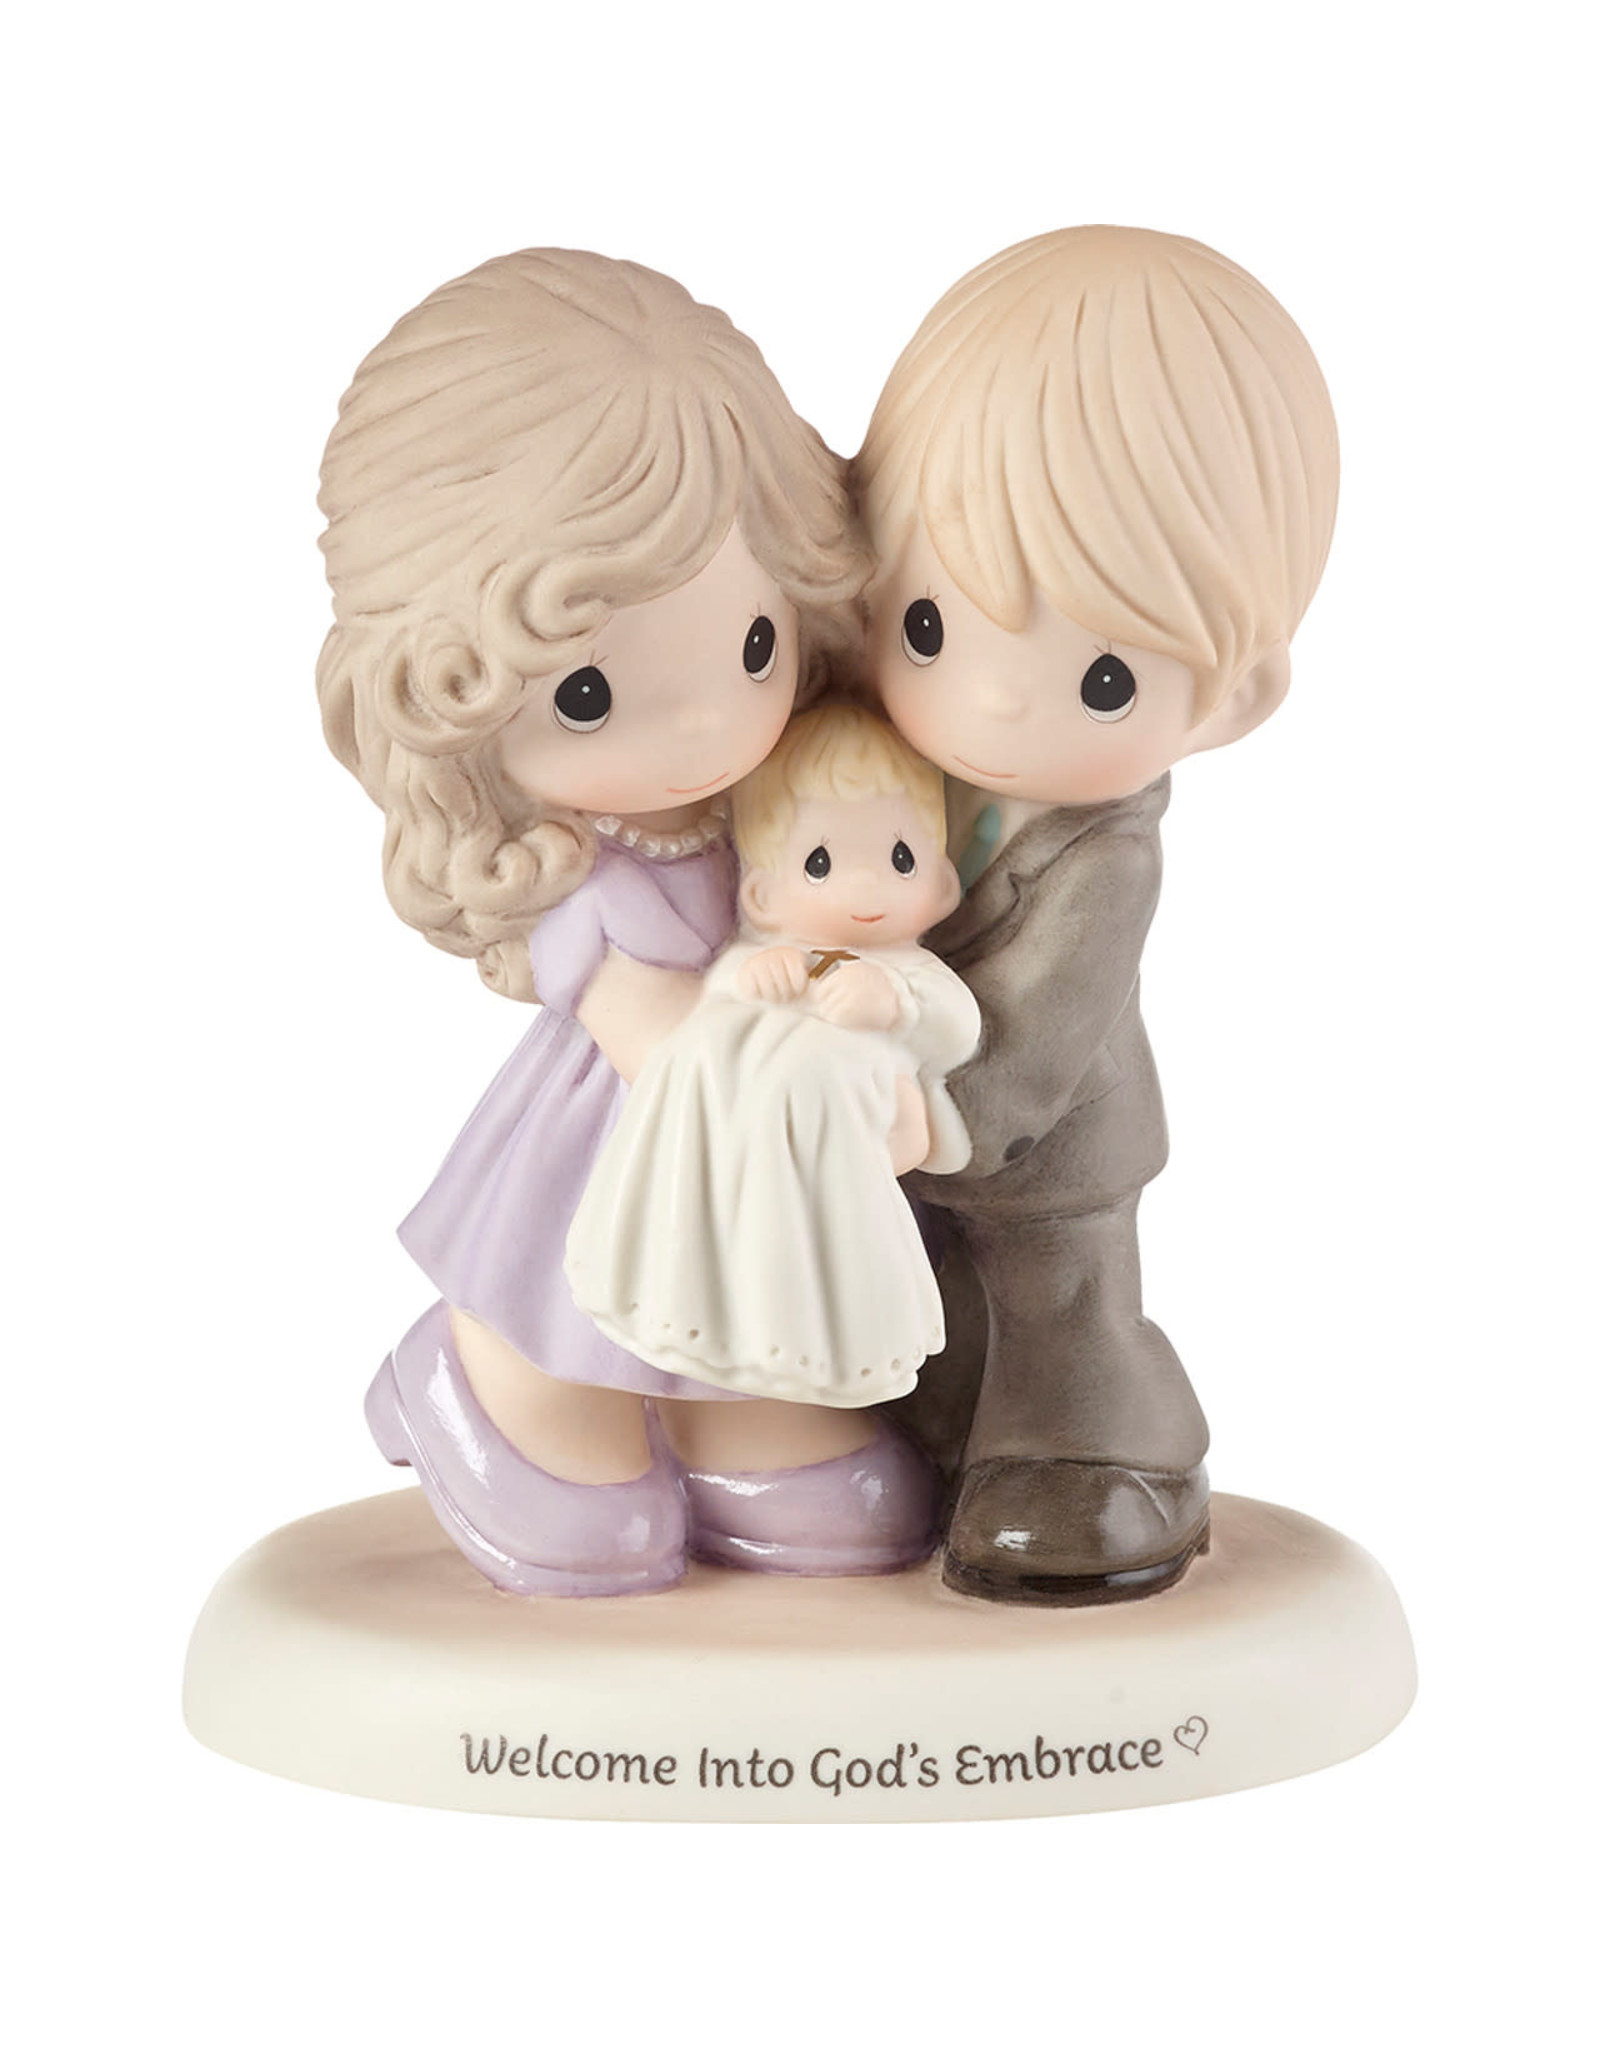 Precious Moments Precious Moments - Welcome Into God's Embrace Figurine